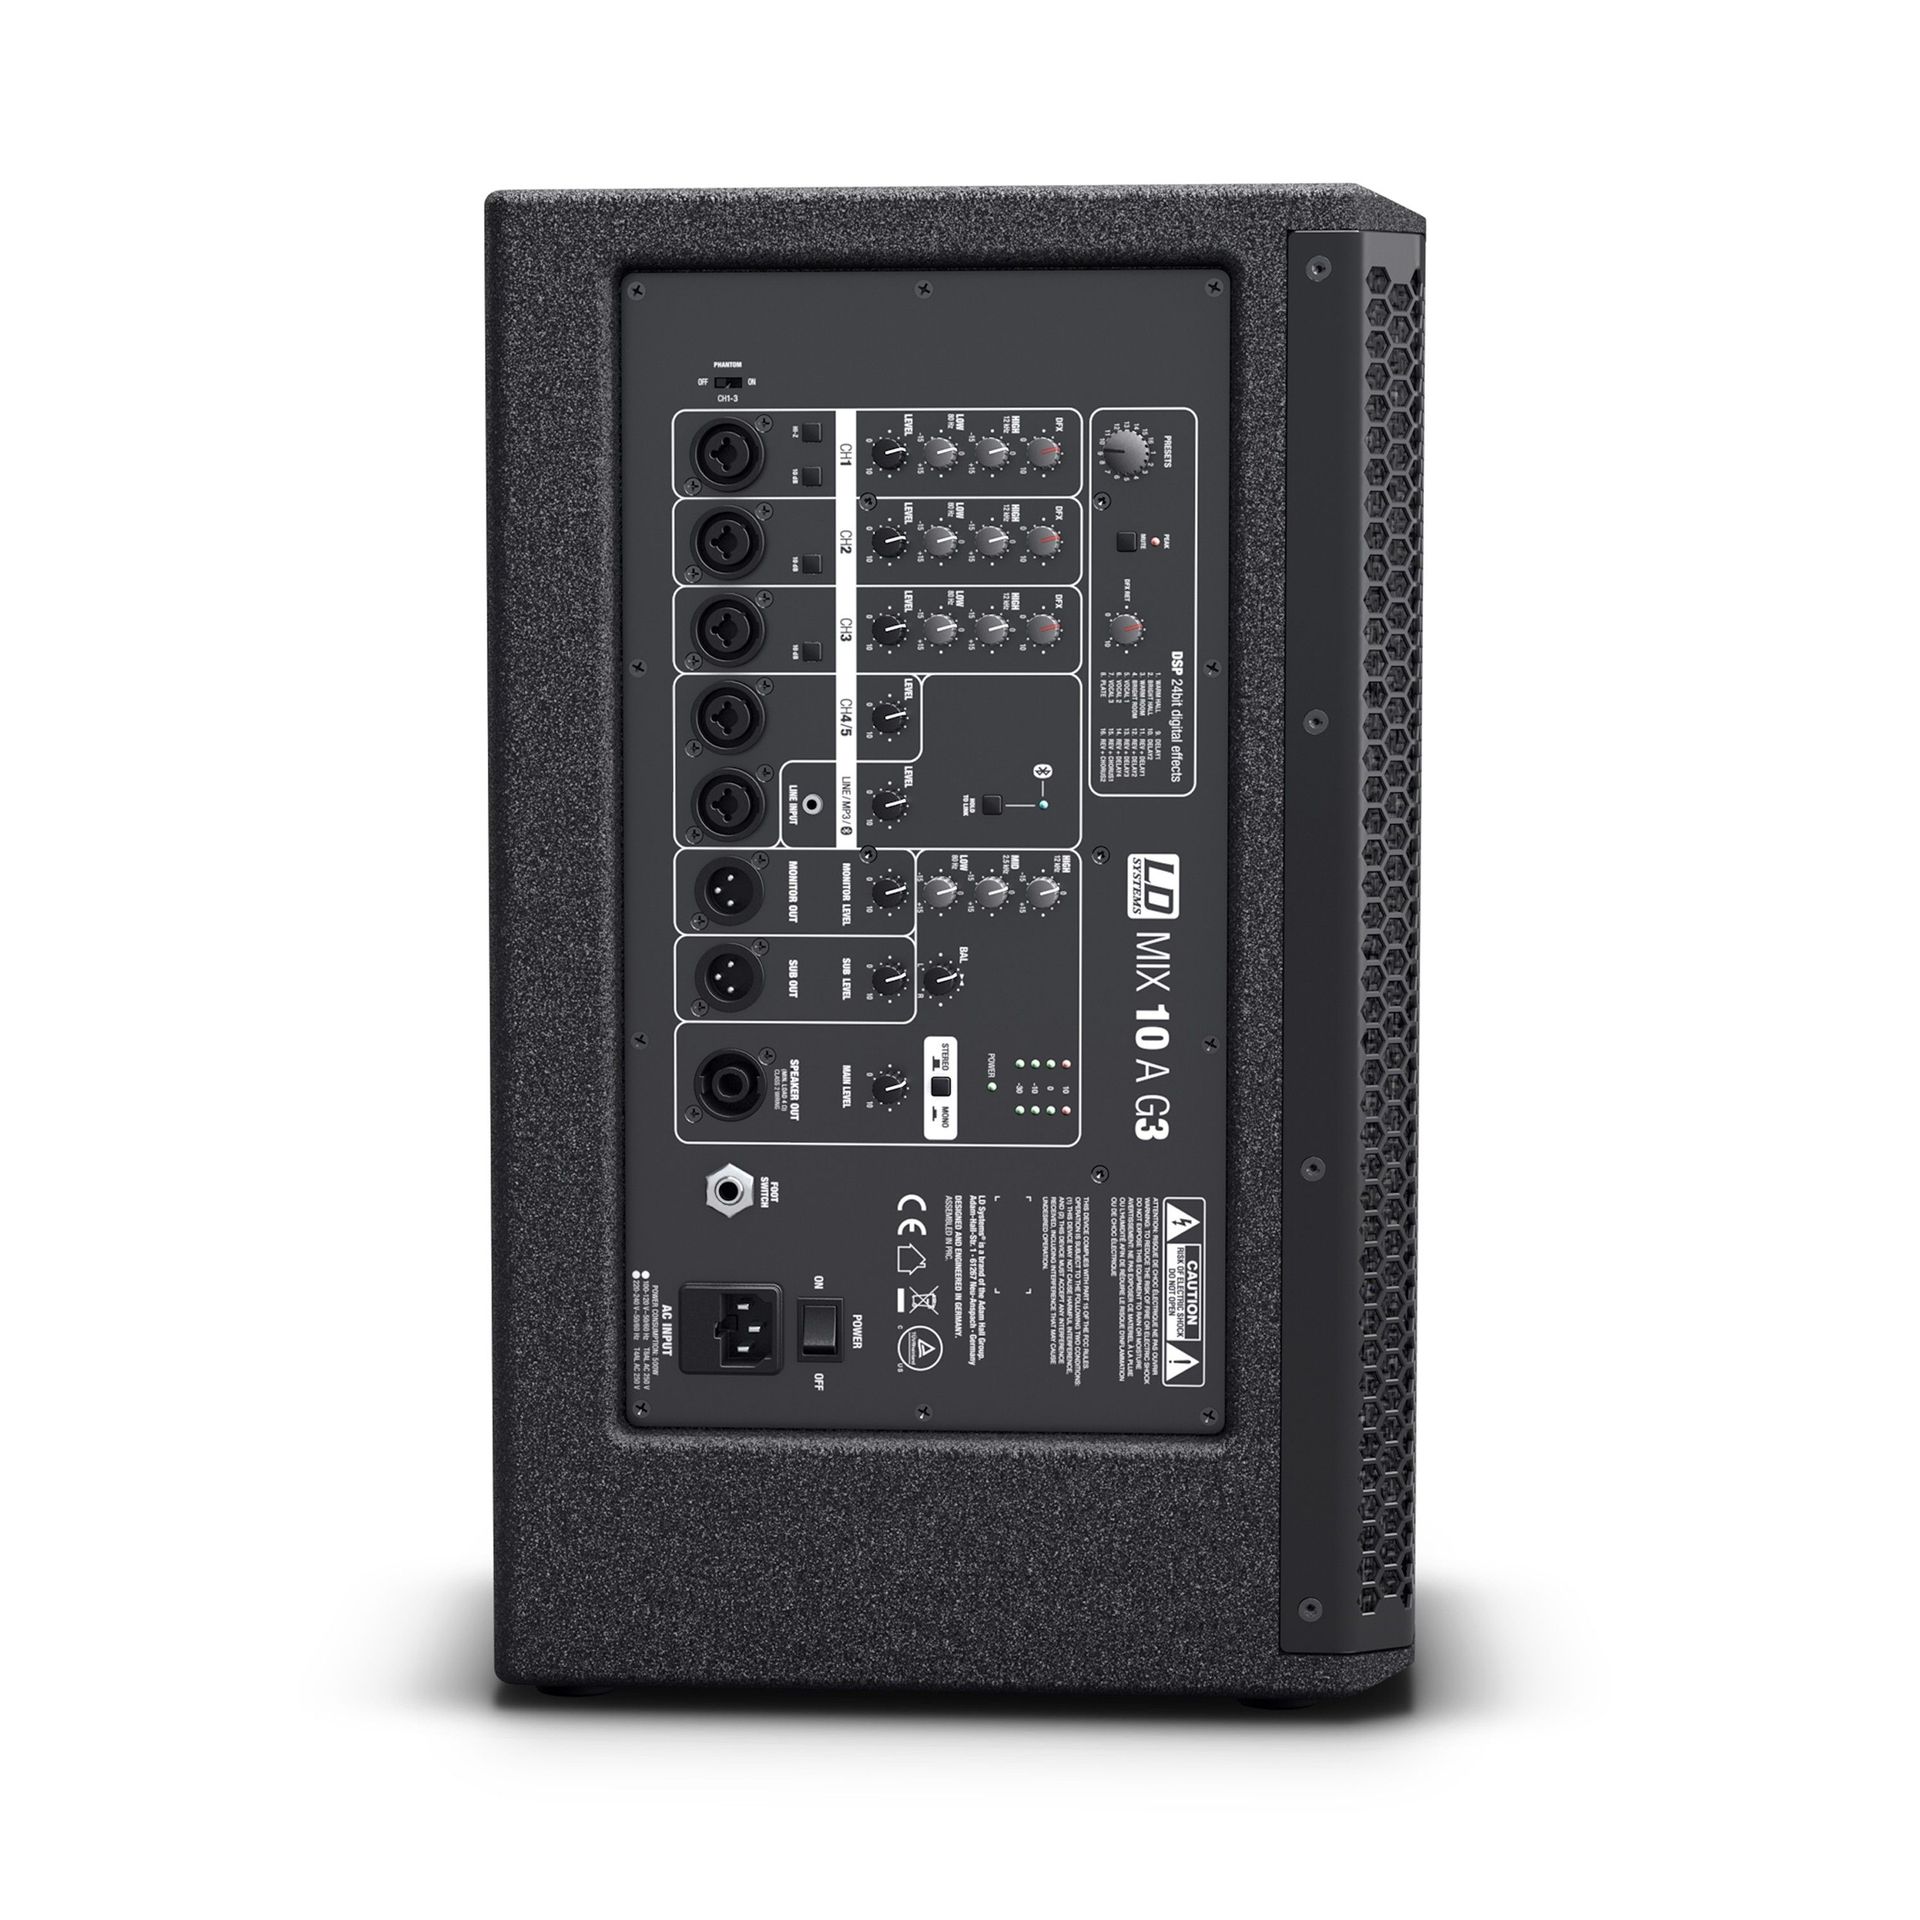 LD Systems Stinger MIX 10 A G3 aktive PA-Box mit 7-Kanal Mixer und Effekt